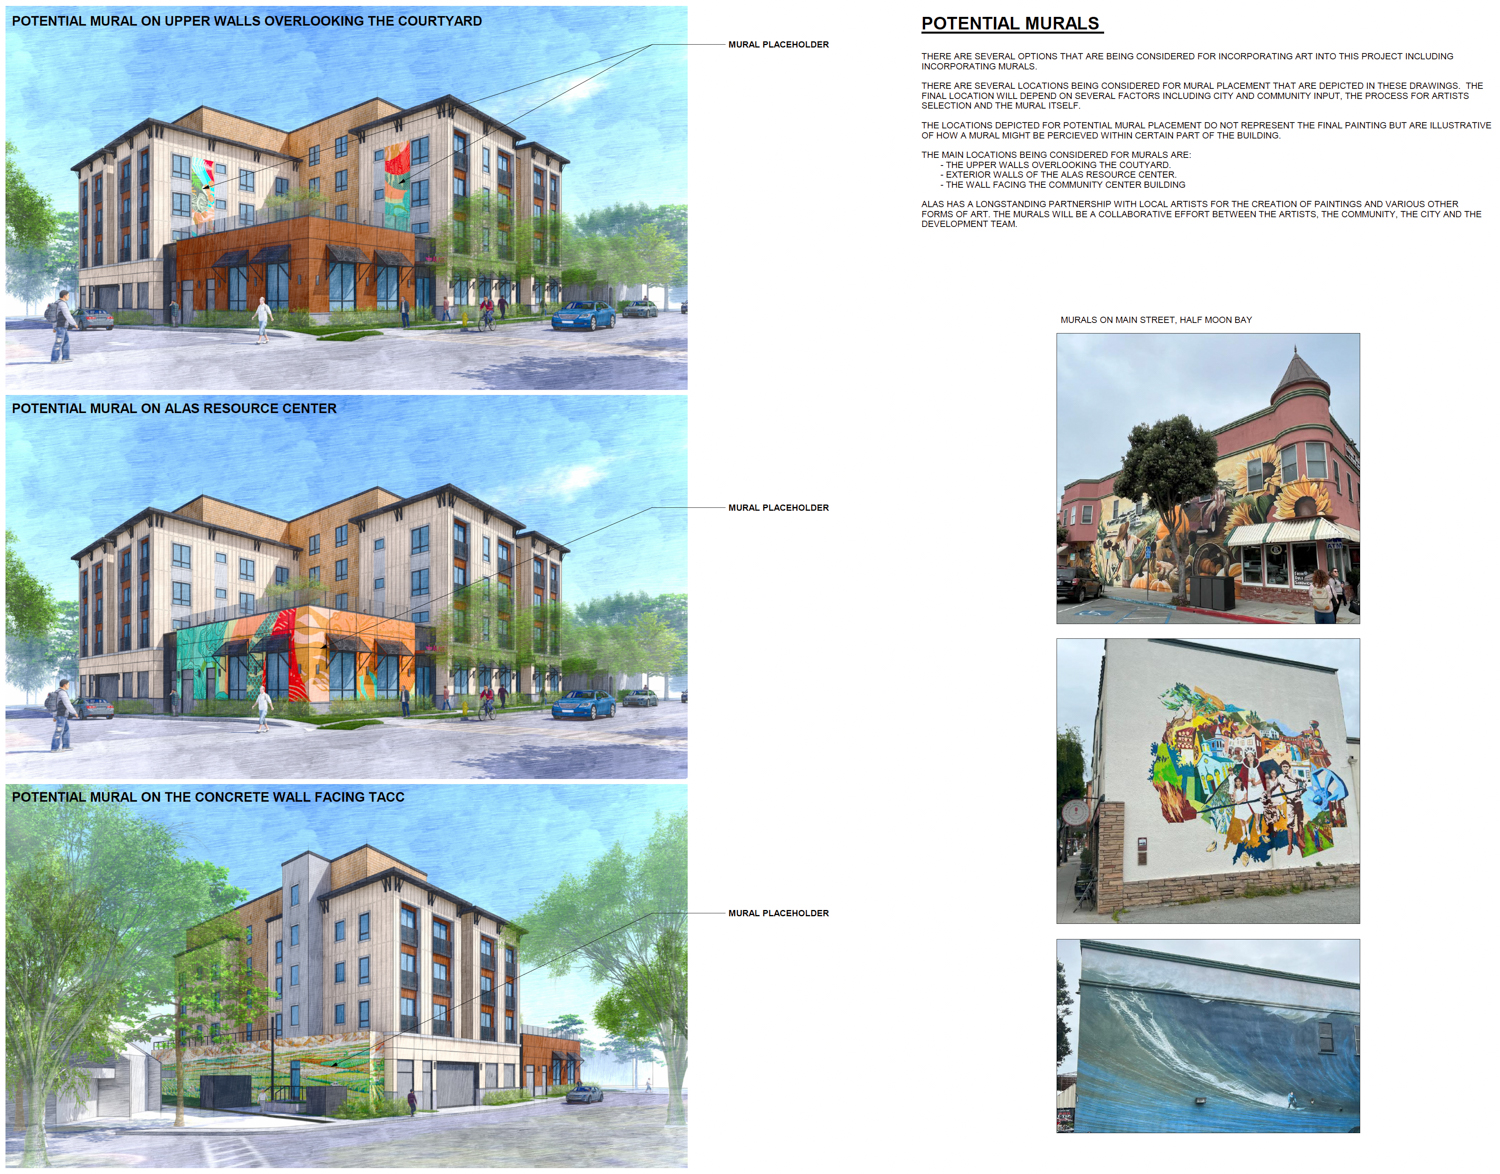 555 Kelly Avenue potential mural inclusion, rendering by Van Meter Williams Pollack